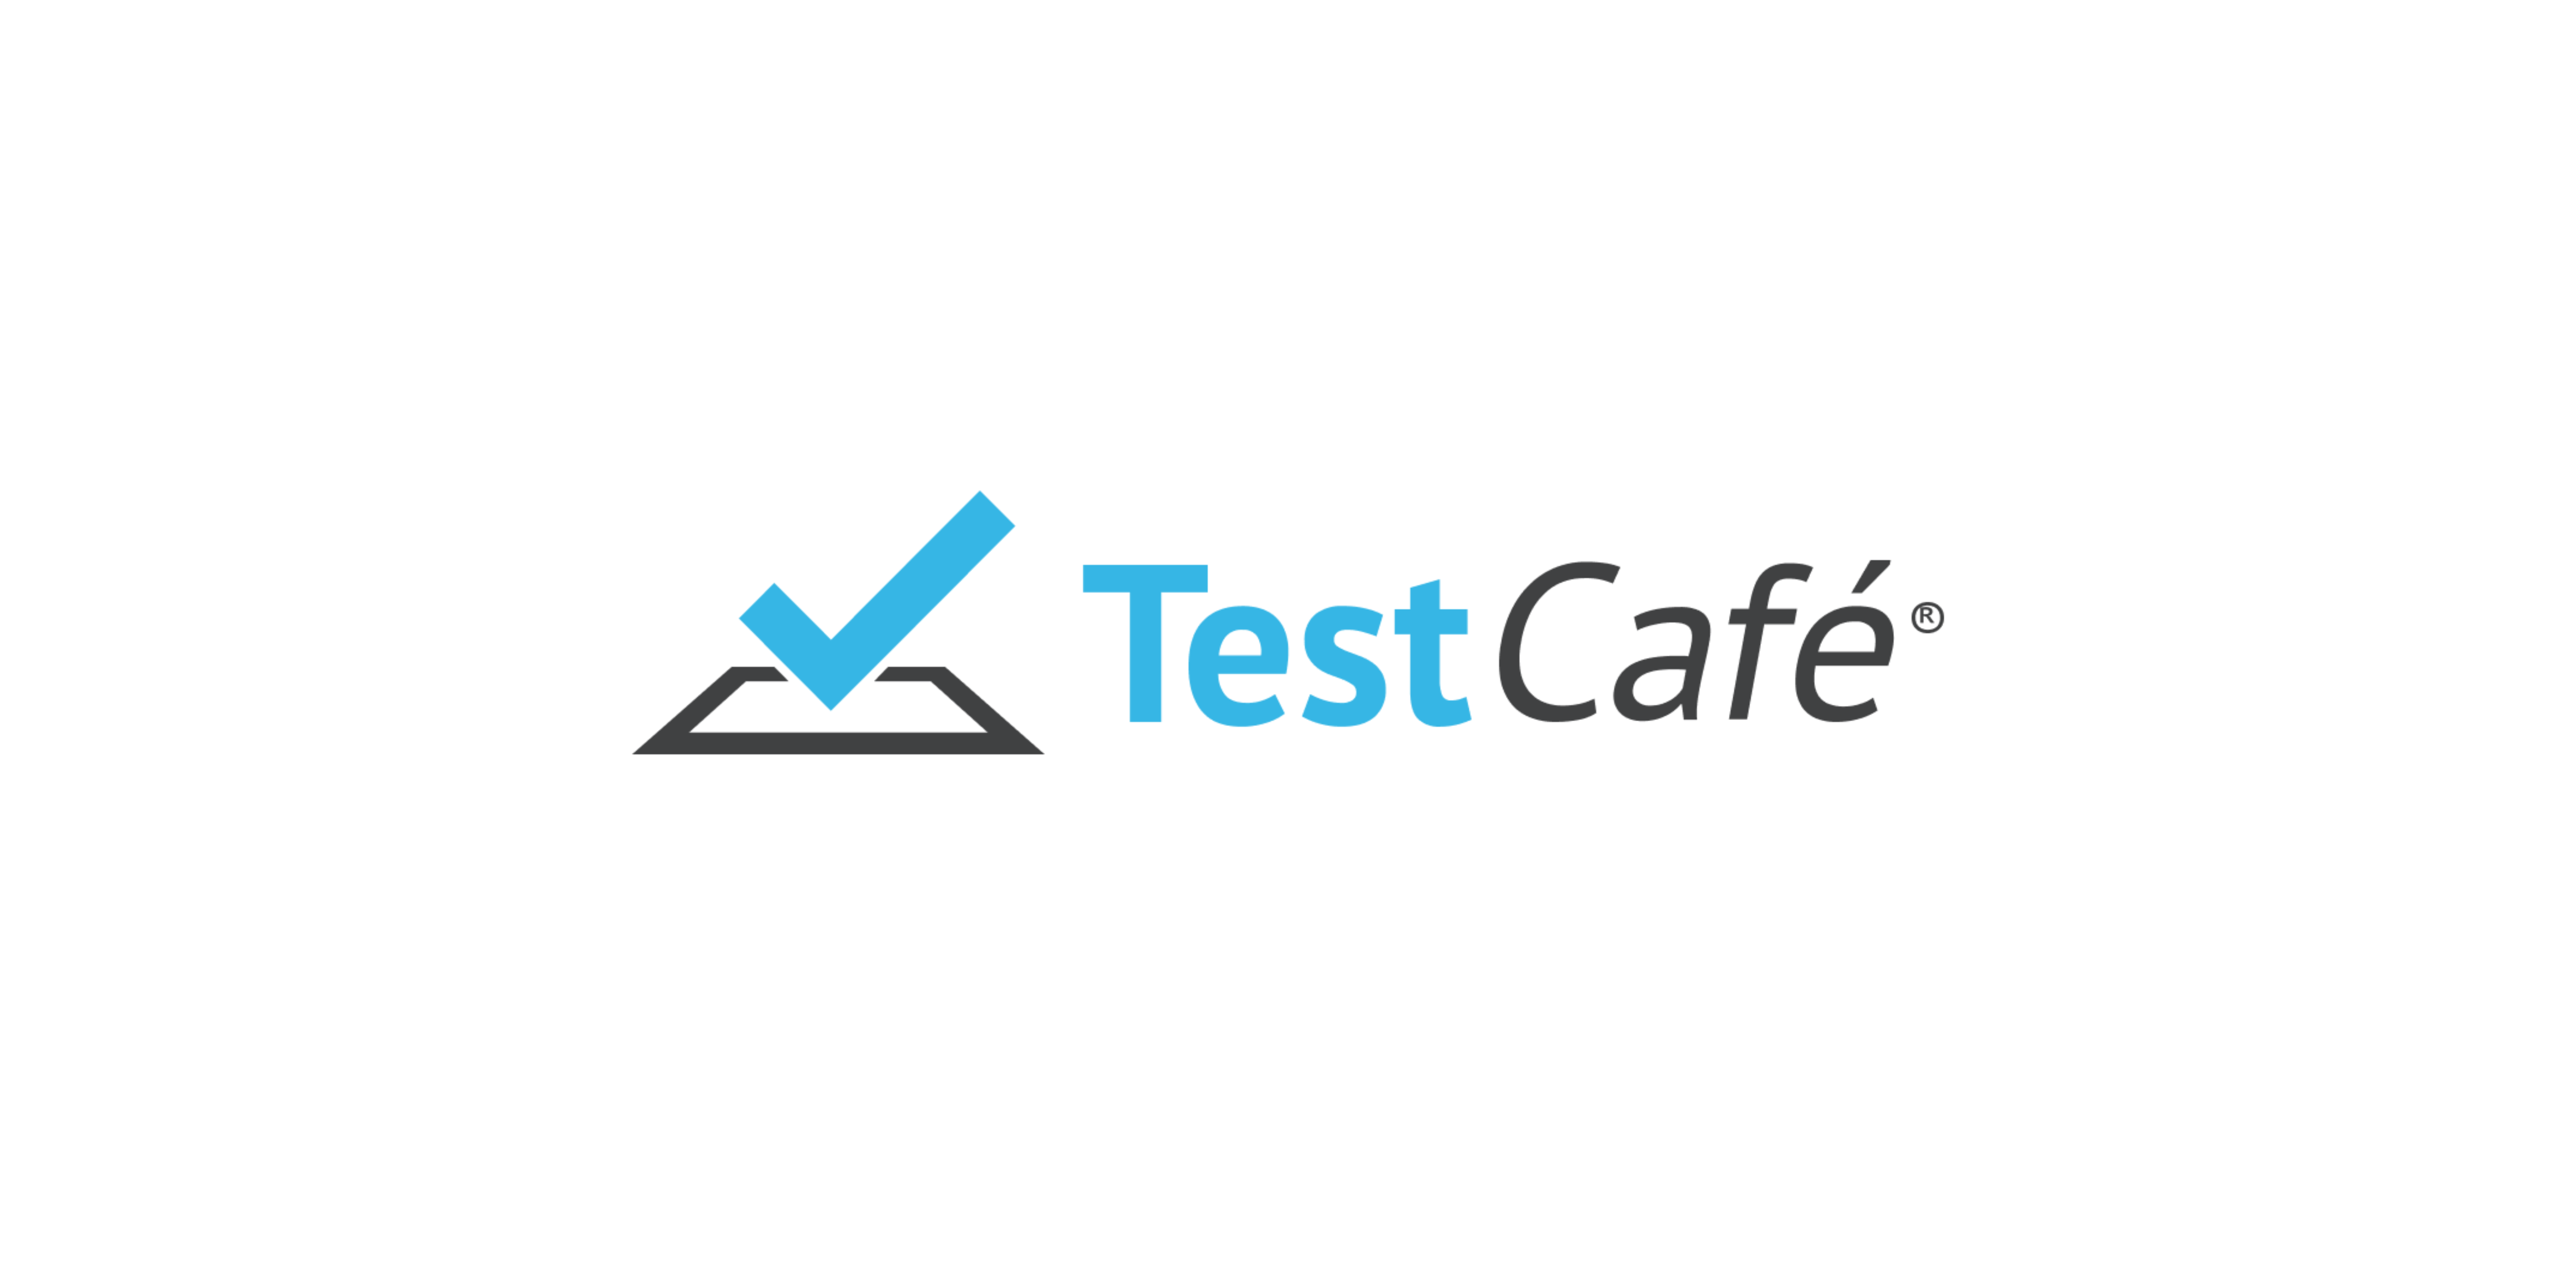 testcafe tools